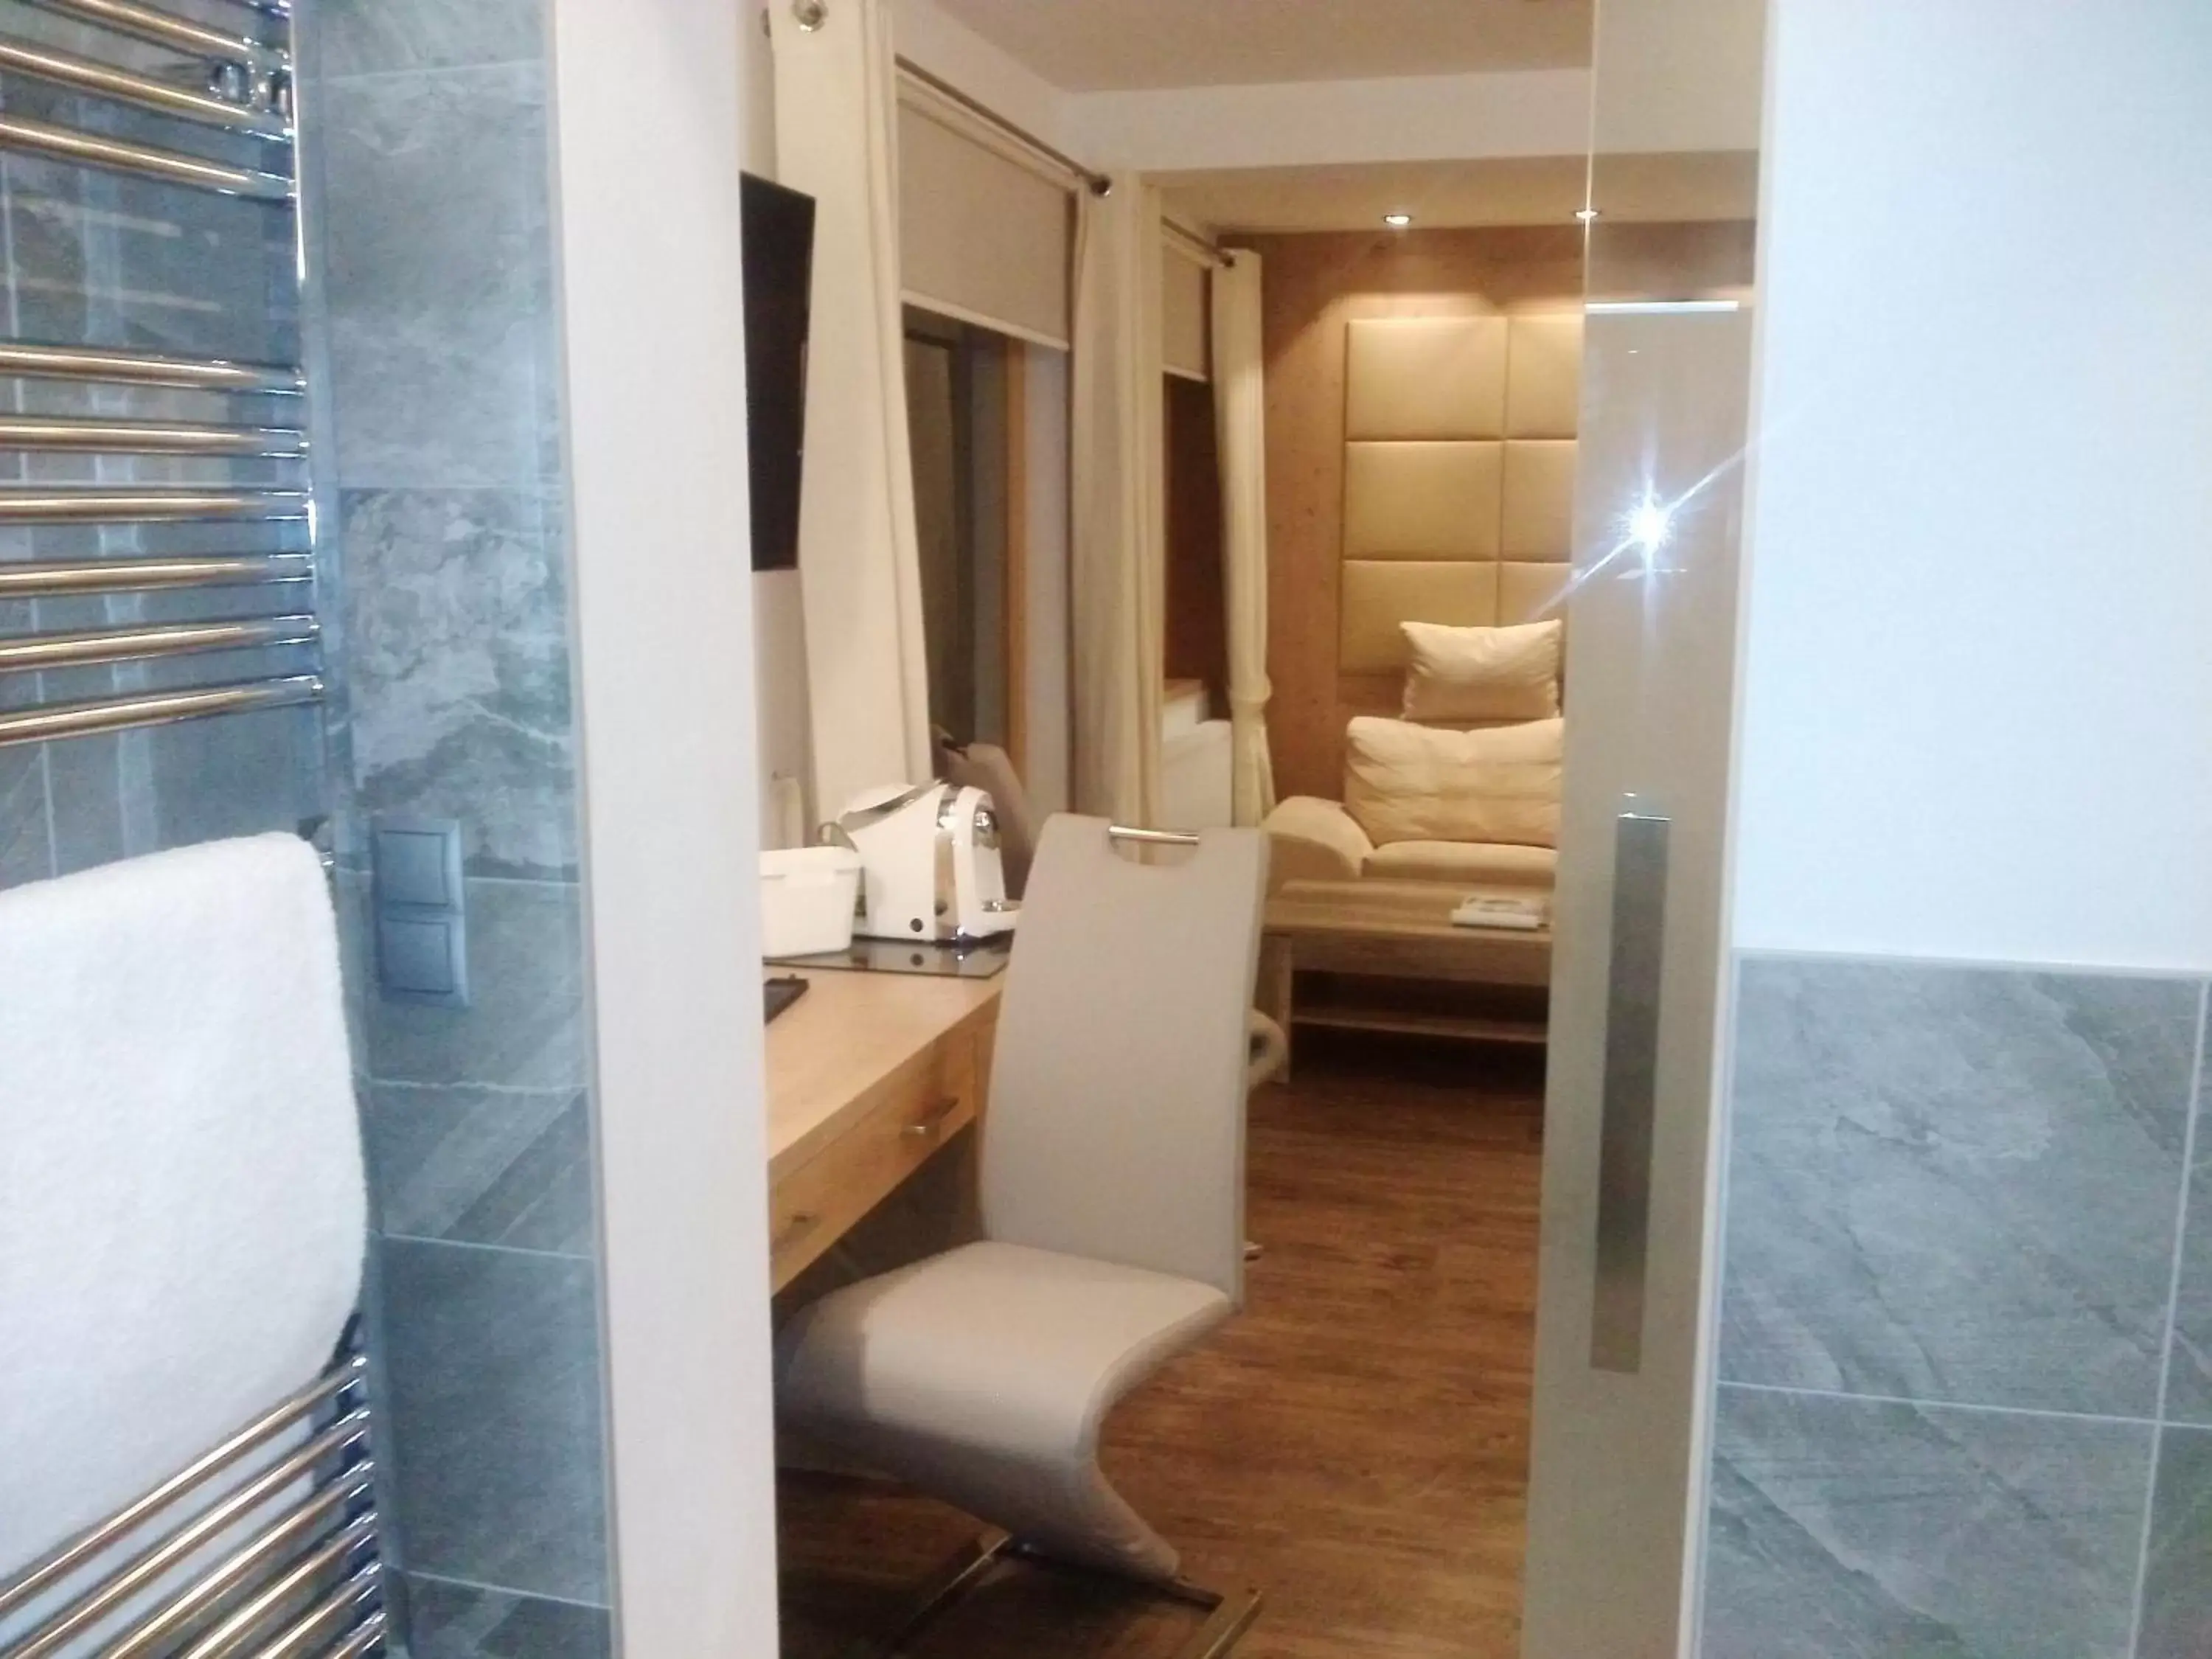 Photo of the whole room, Bathroom in Hotel Vergeiner